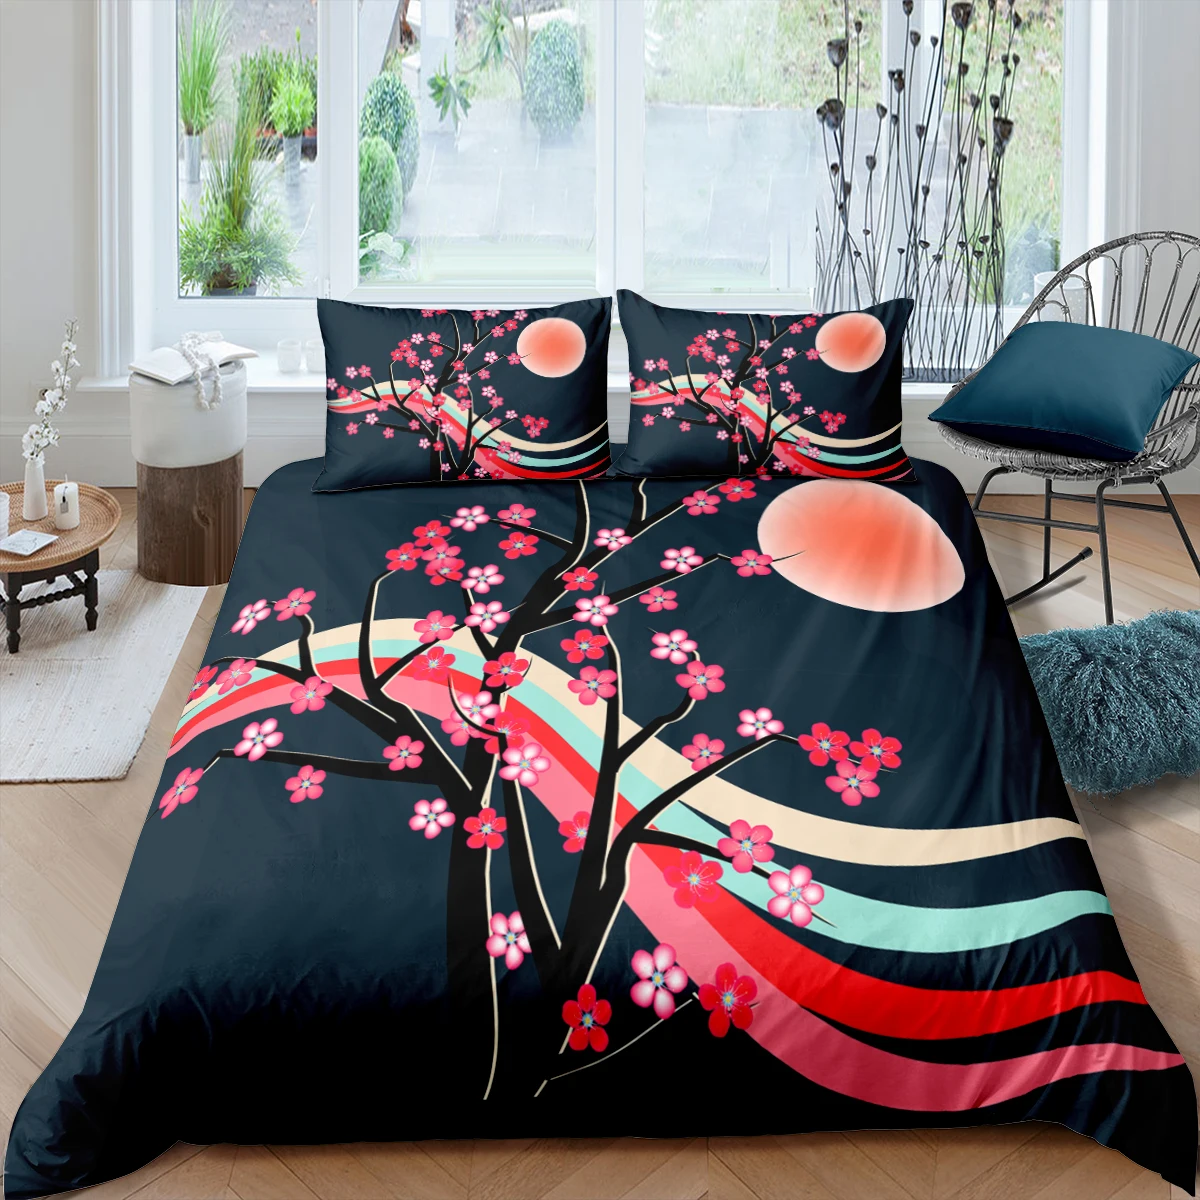 Home Textiles Luxury 3D Cherry Blossoms Duvet Cover Set Pillowcase Moon Bedding Set AU/EU/UK/US Queen and King Size Sets